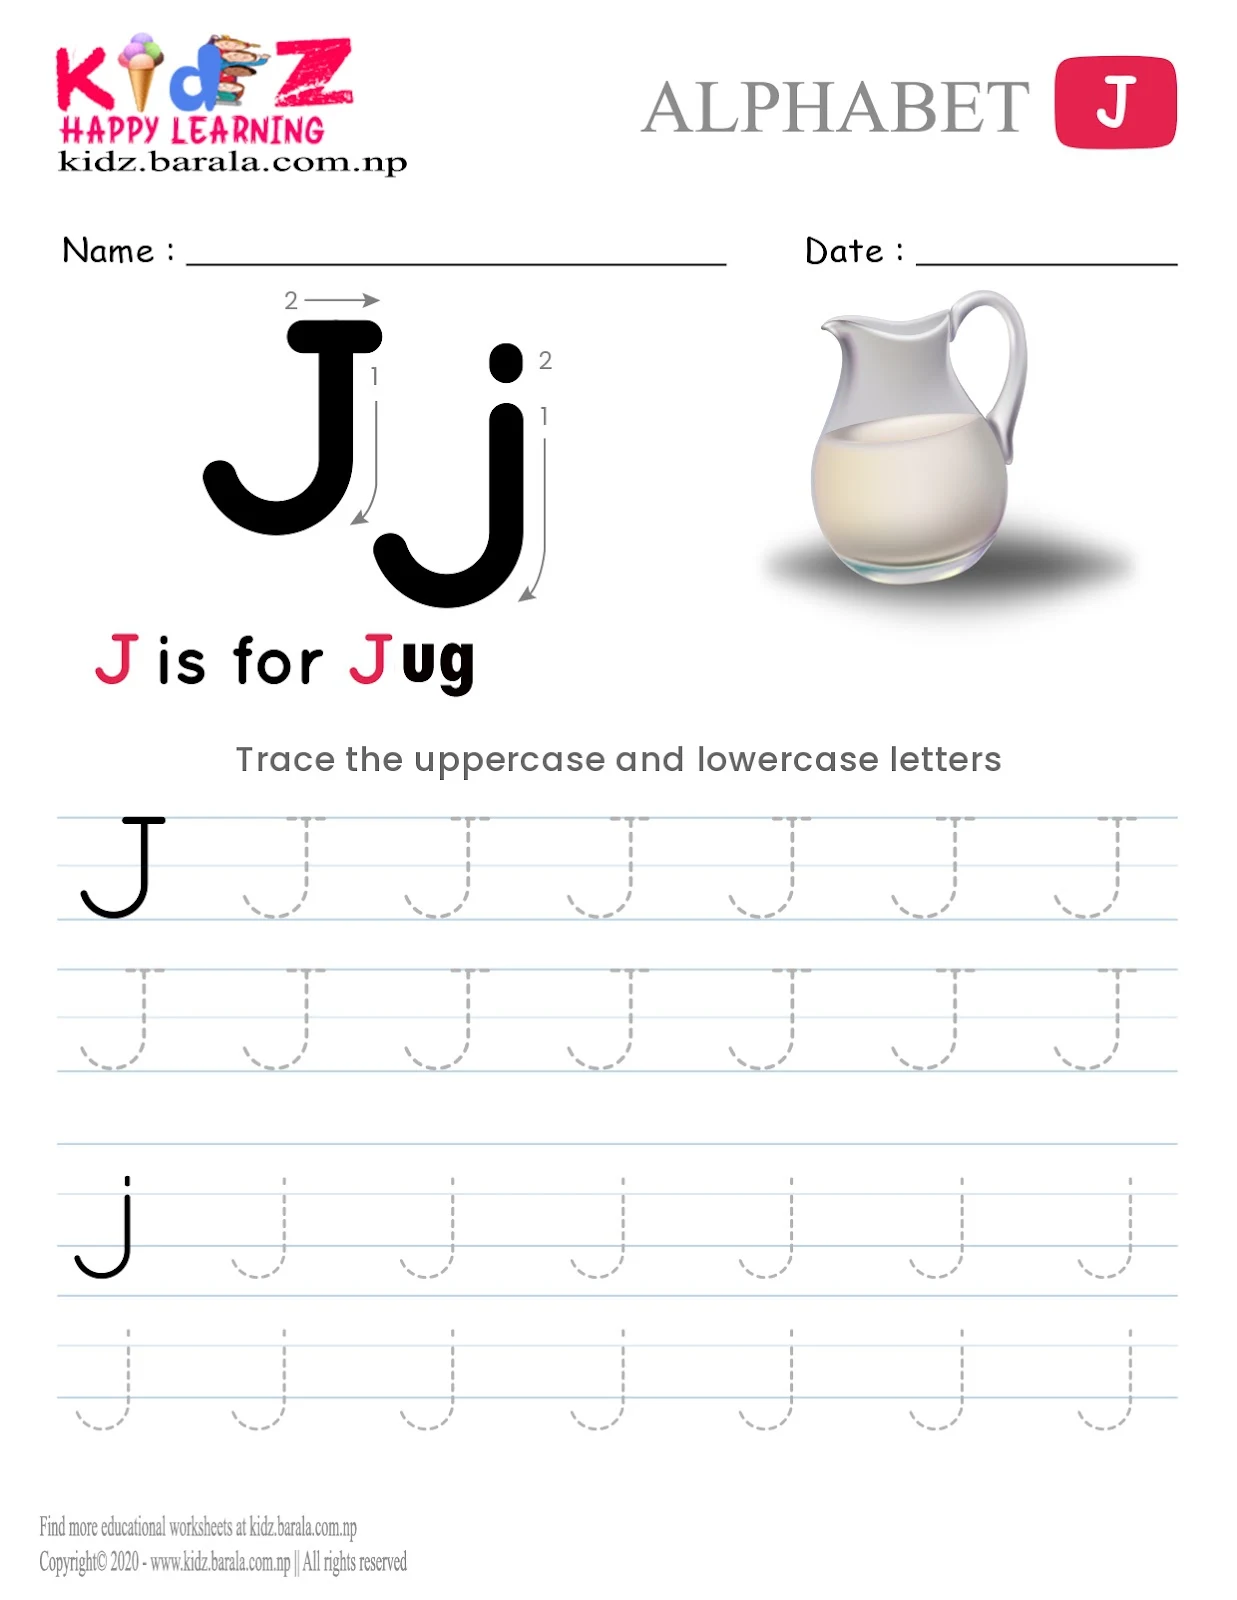 Alphabet J tracing worksheet free download .pdf